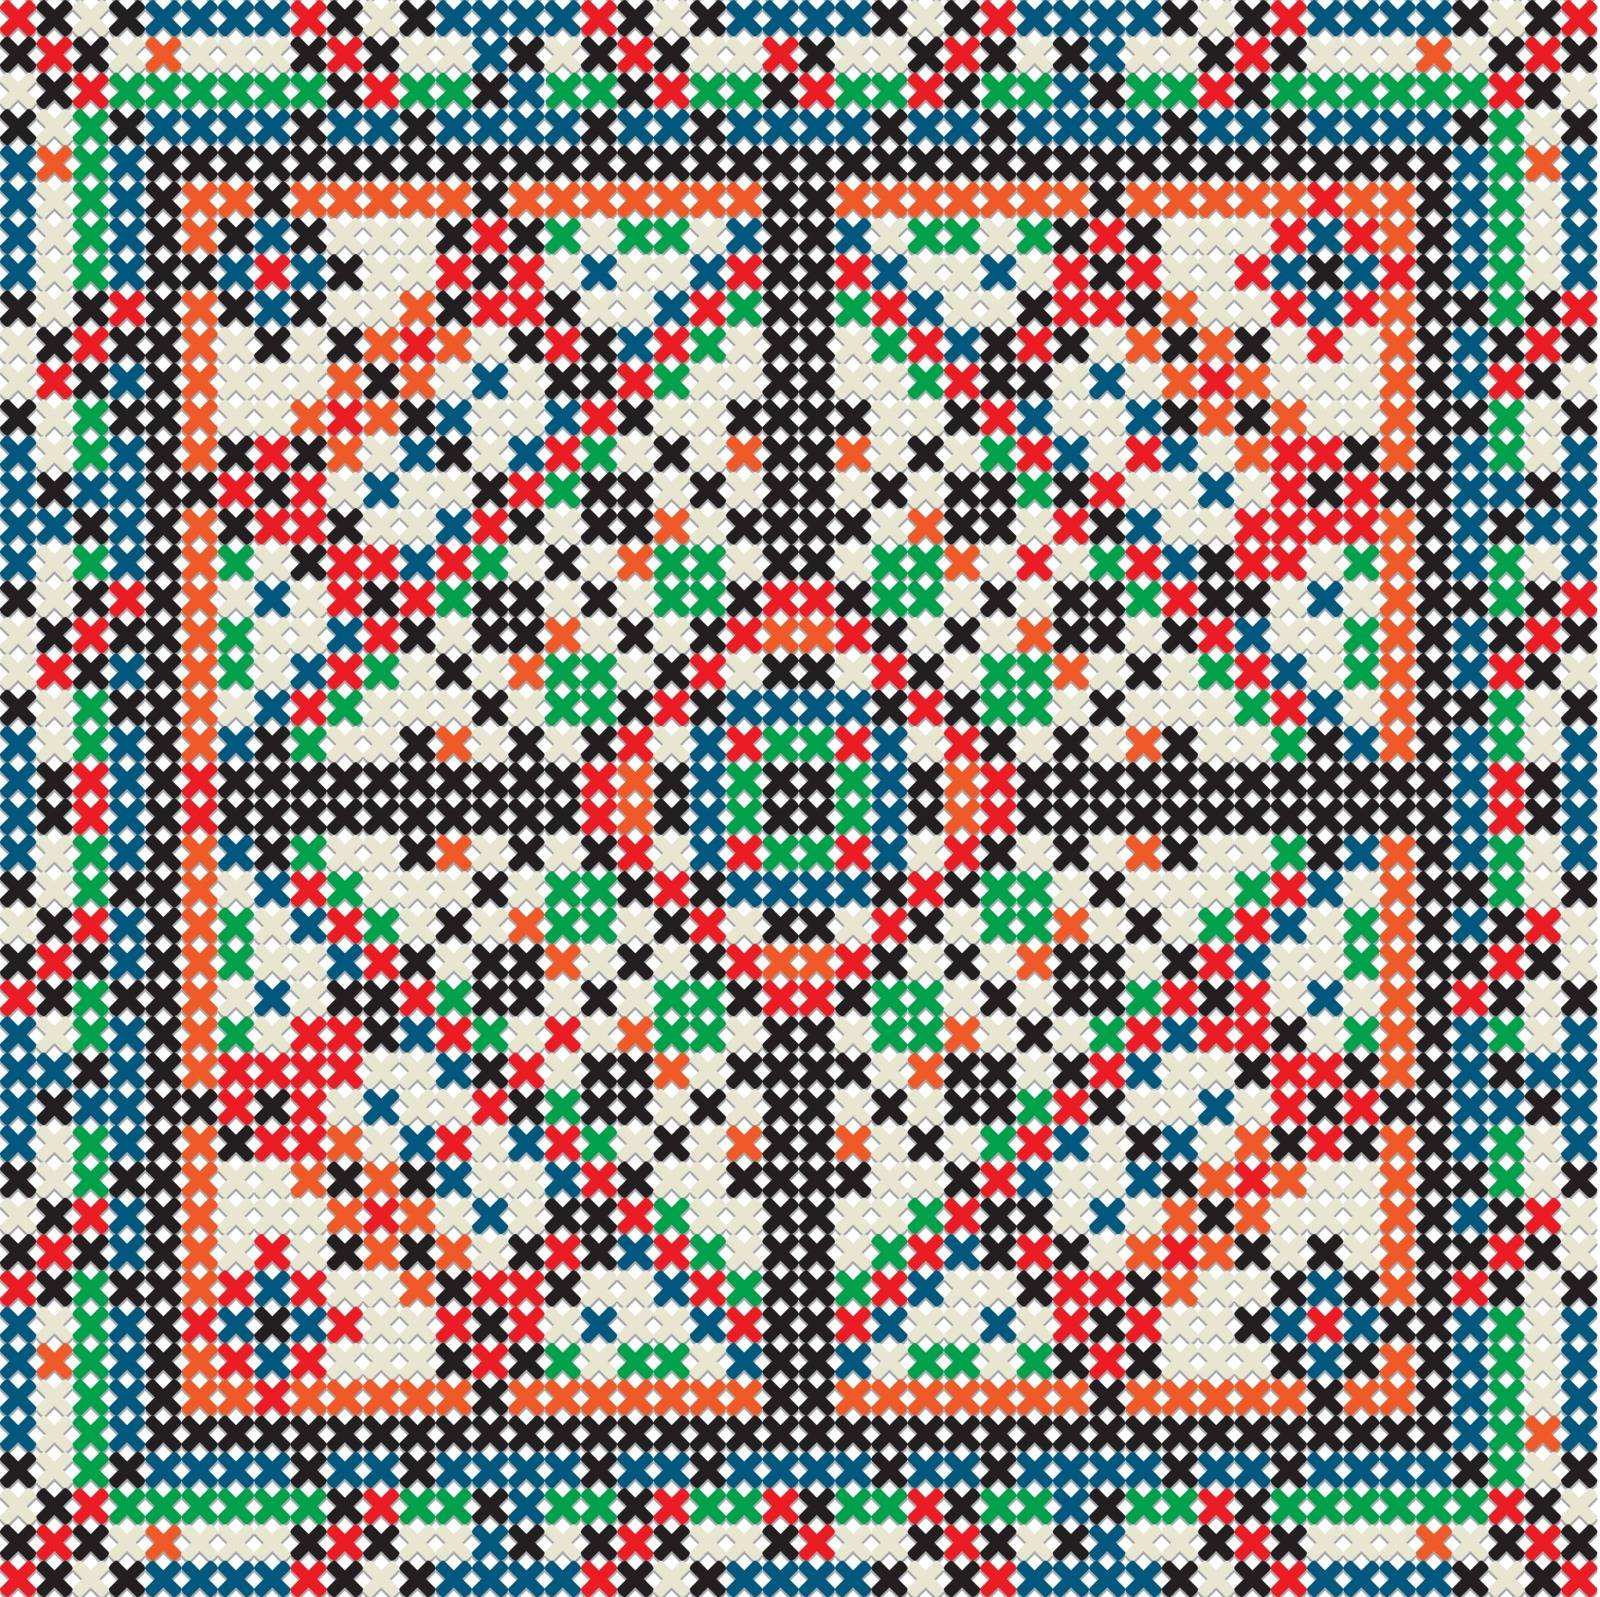 Decorative knit tile, seamless pattern